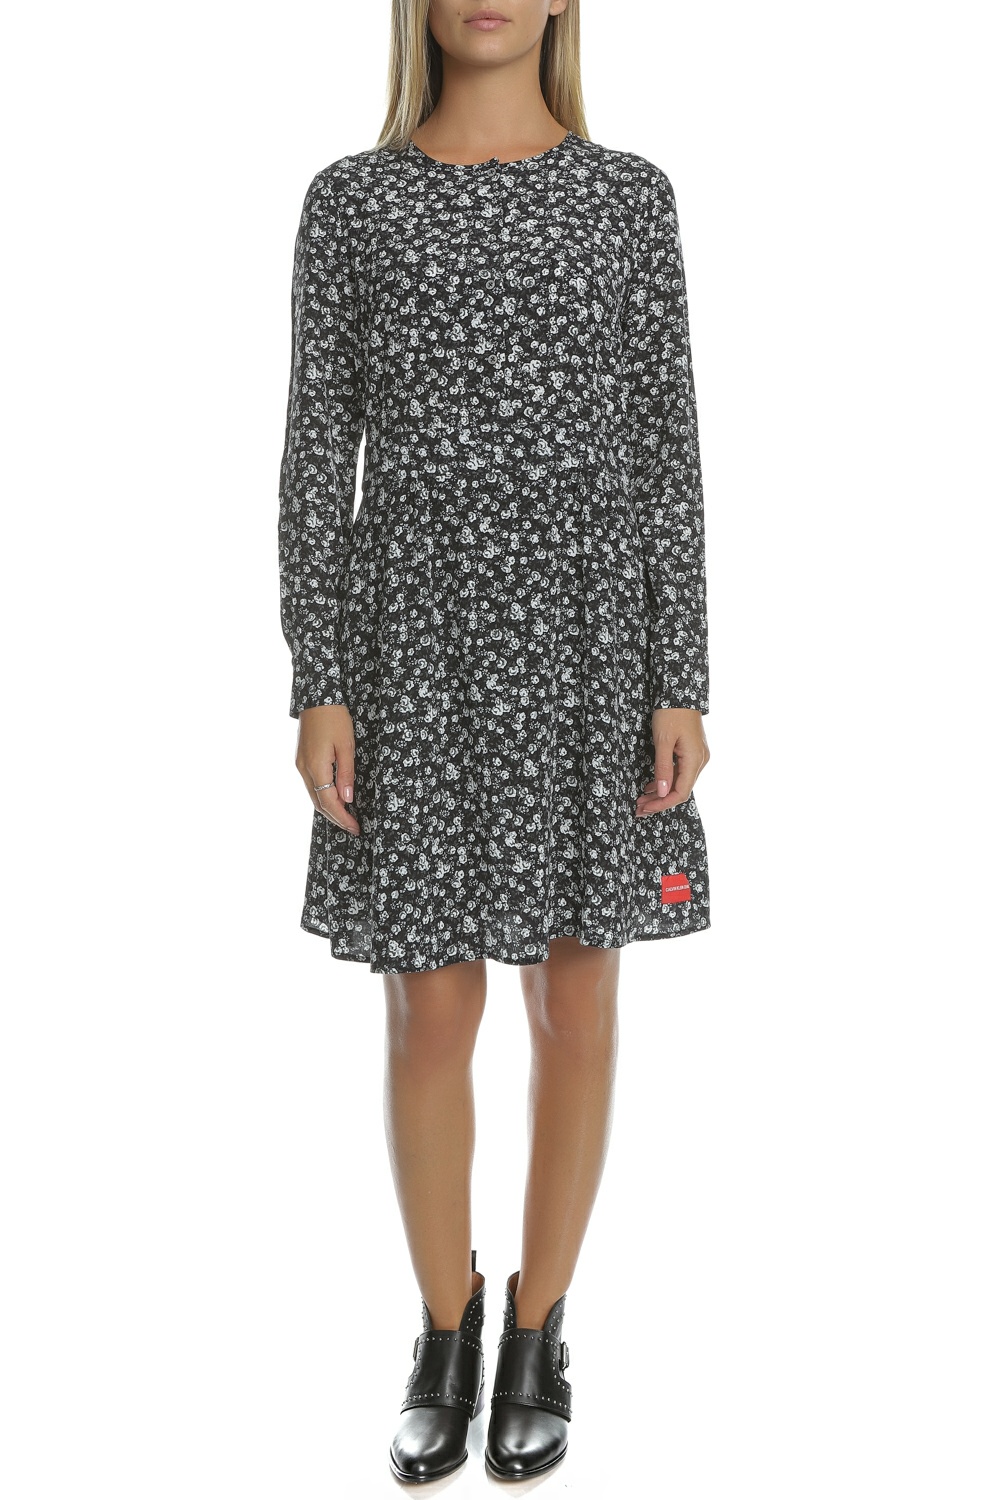 CALVIN KLEIN JEANS – Γυναικείο midi φόρεμα FLOWER PRINT CALVIN KLEIN JEANS μαύρο-λευκό 1658091.0-7191